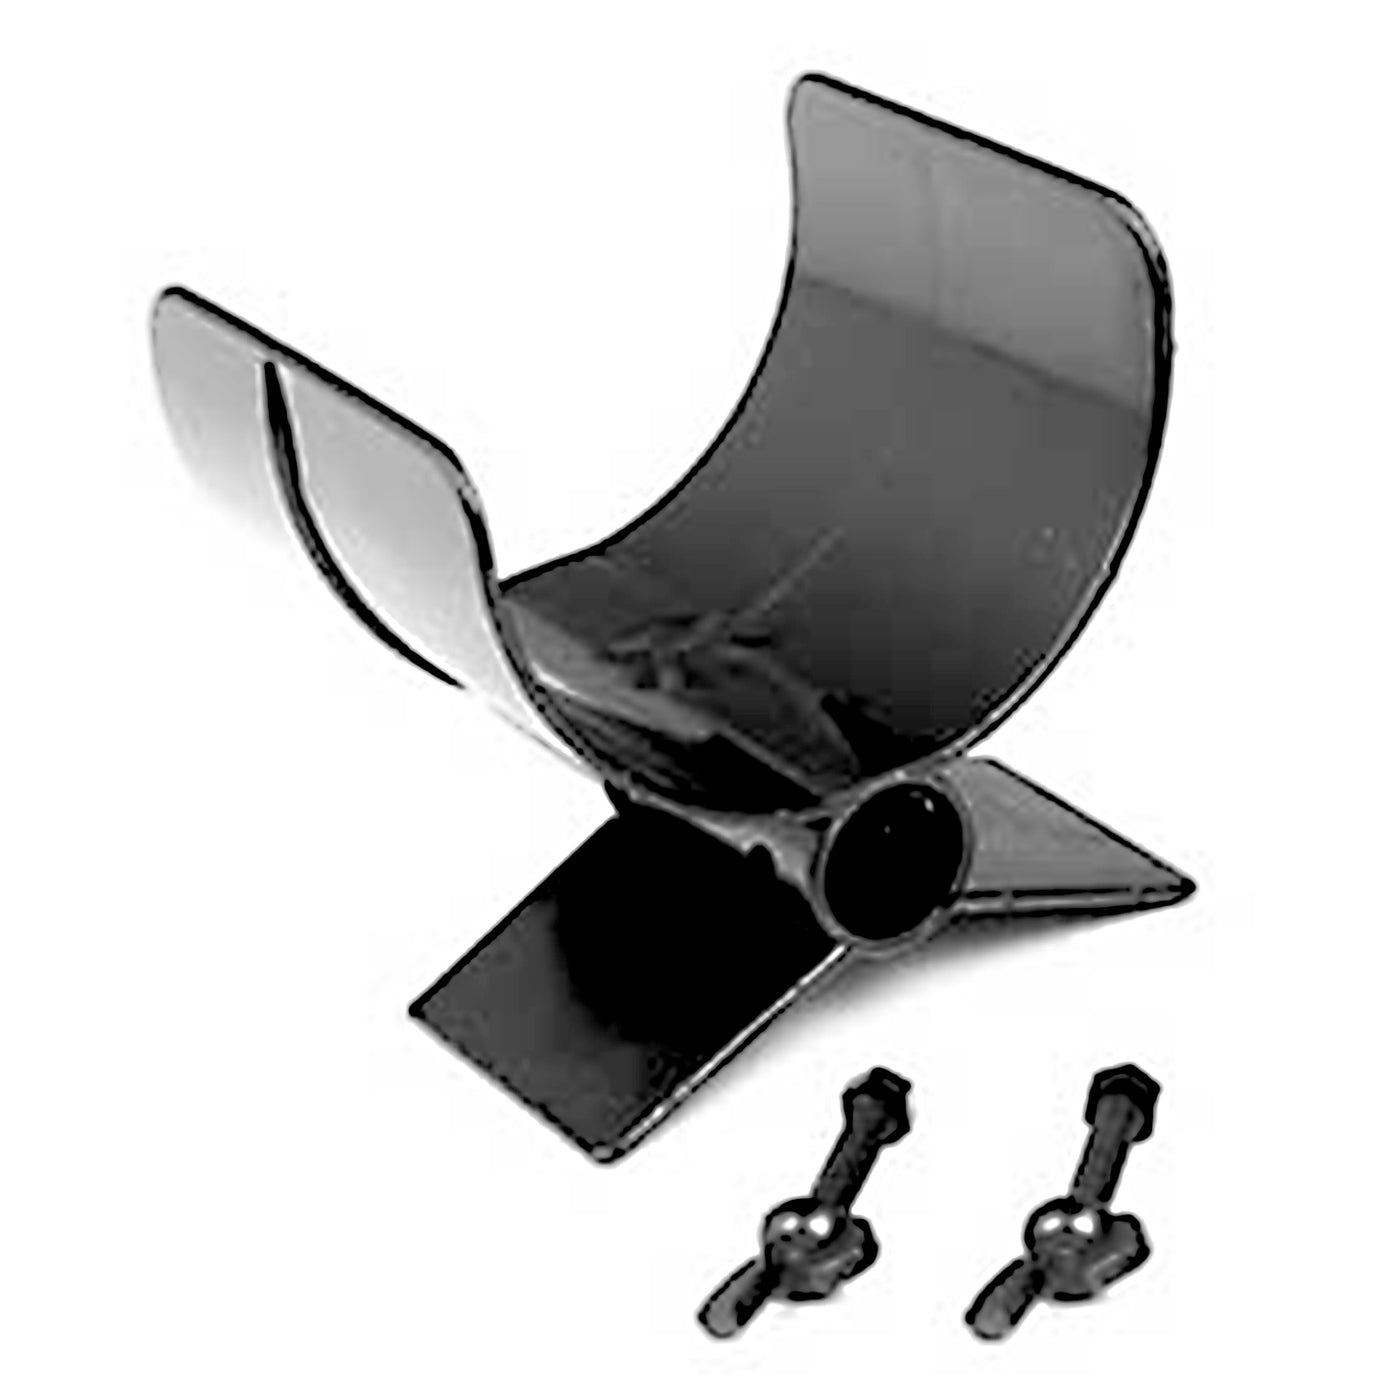 Armrest Kit for Minelab X-Terra Metal Detectors 通販